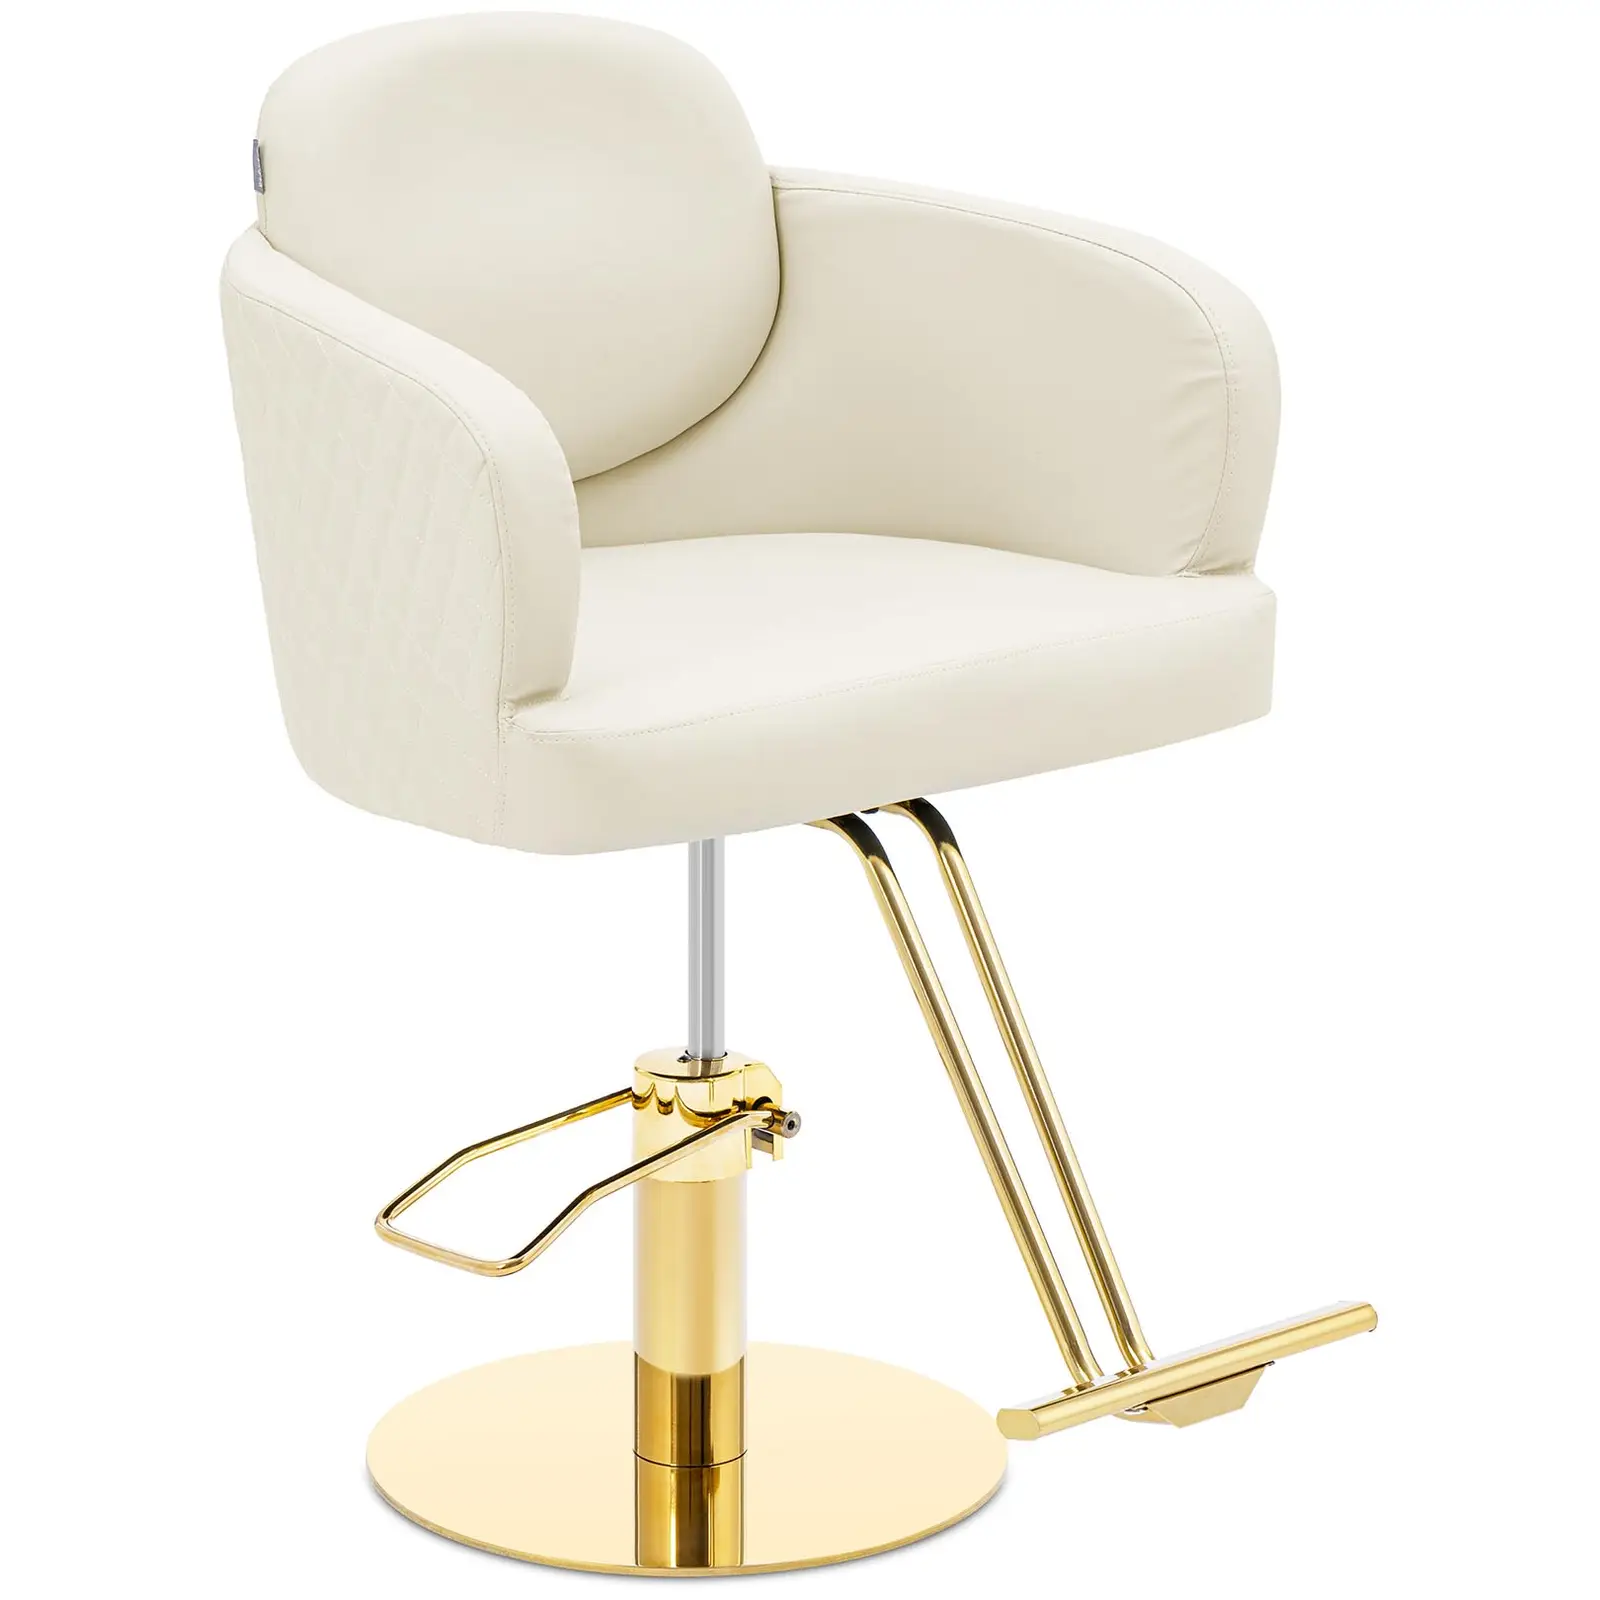 Salonska stolica s osloncem za noge - 870 - 1020 mm - 200 kg - krem / zlatna